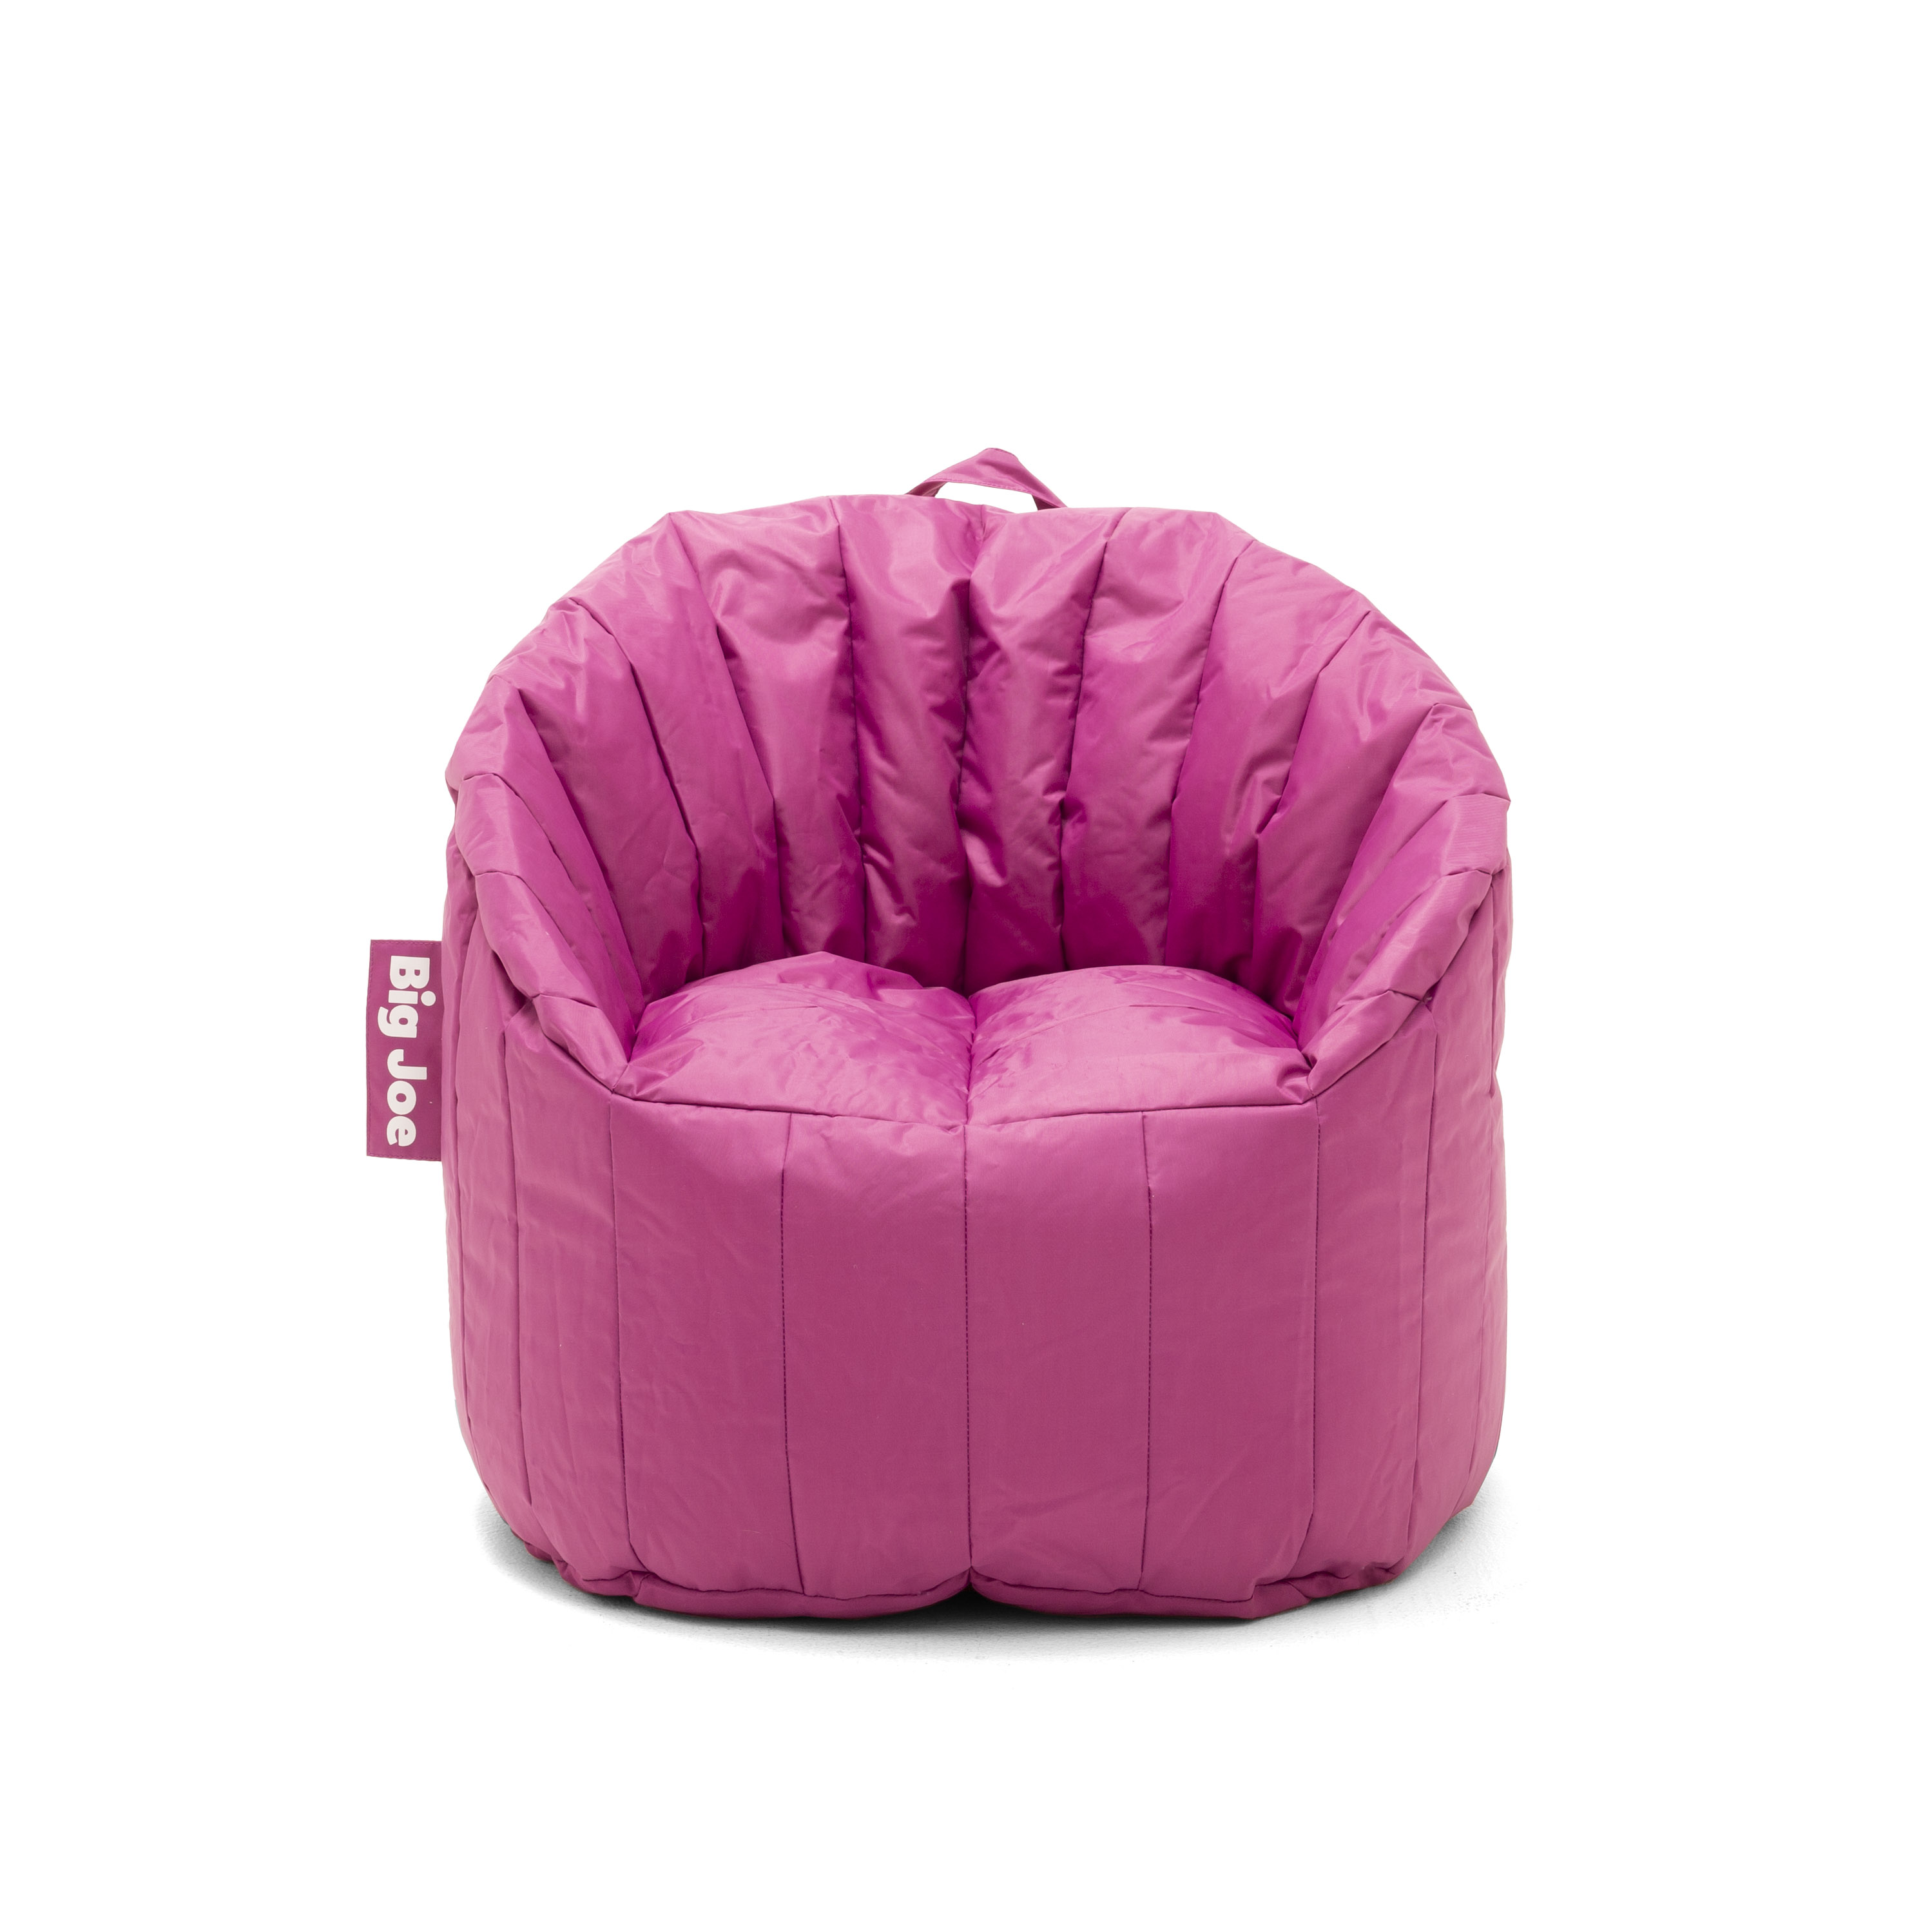 Big Joe Lumin Bean Bag Chair, Available in Multiple Colors - image 2 of 4